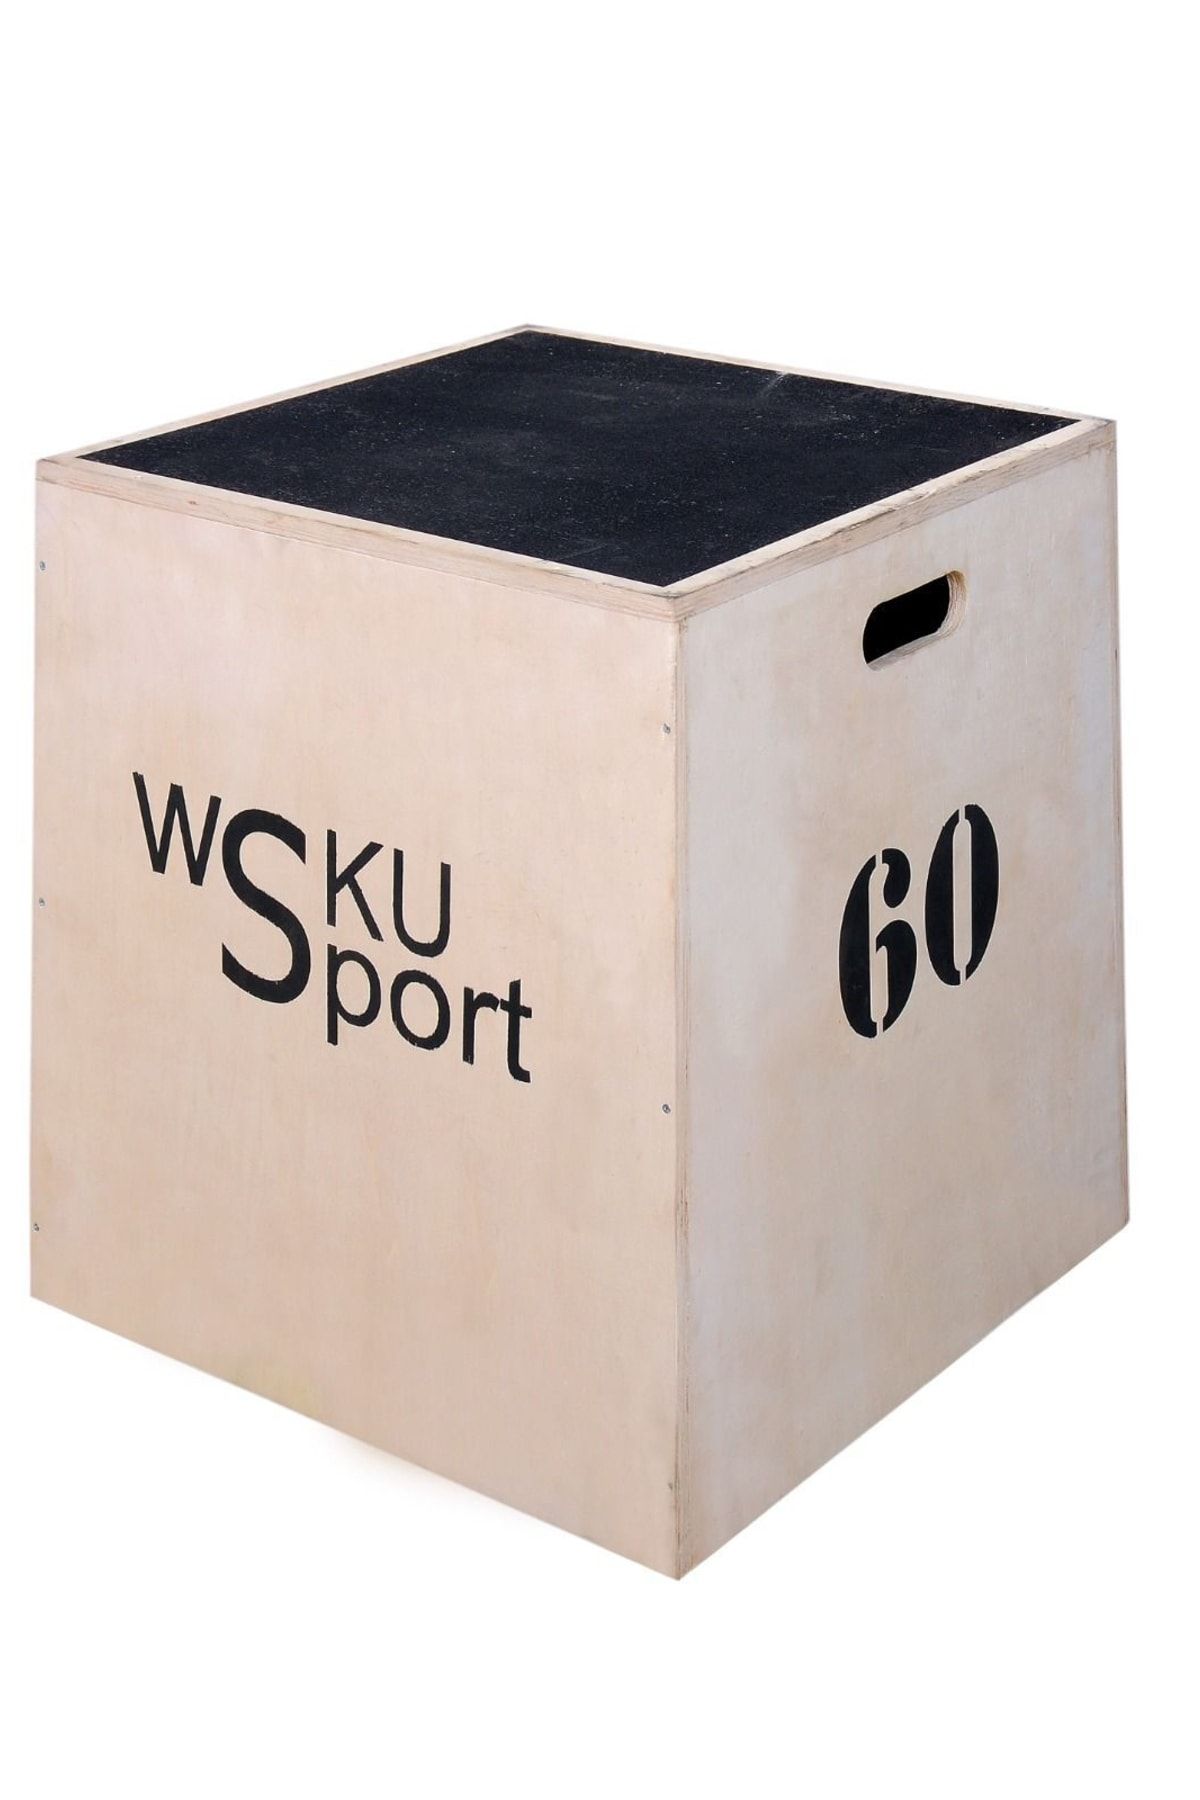 WSKU SPOR Crossfit Box Atlama Kutusu 60 Cm